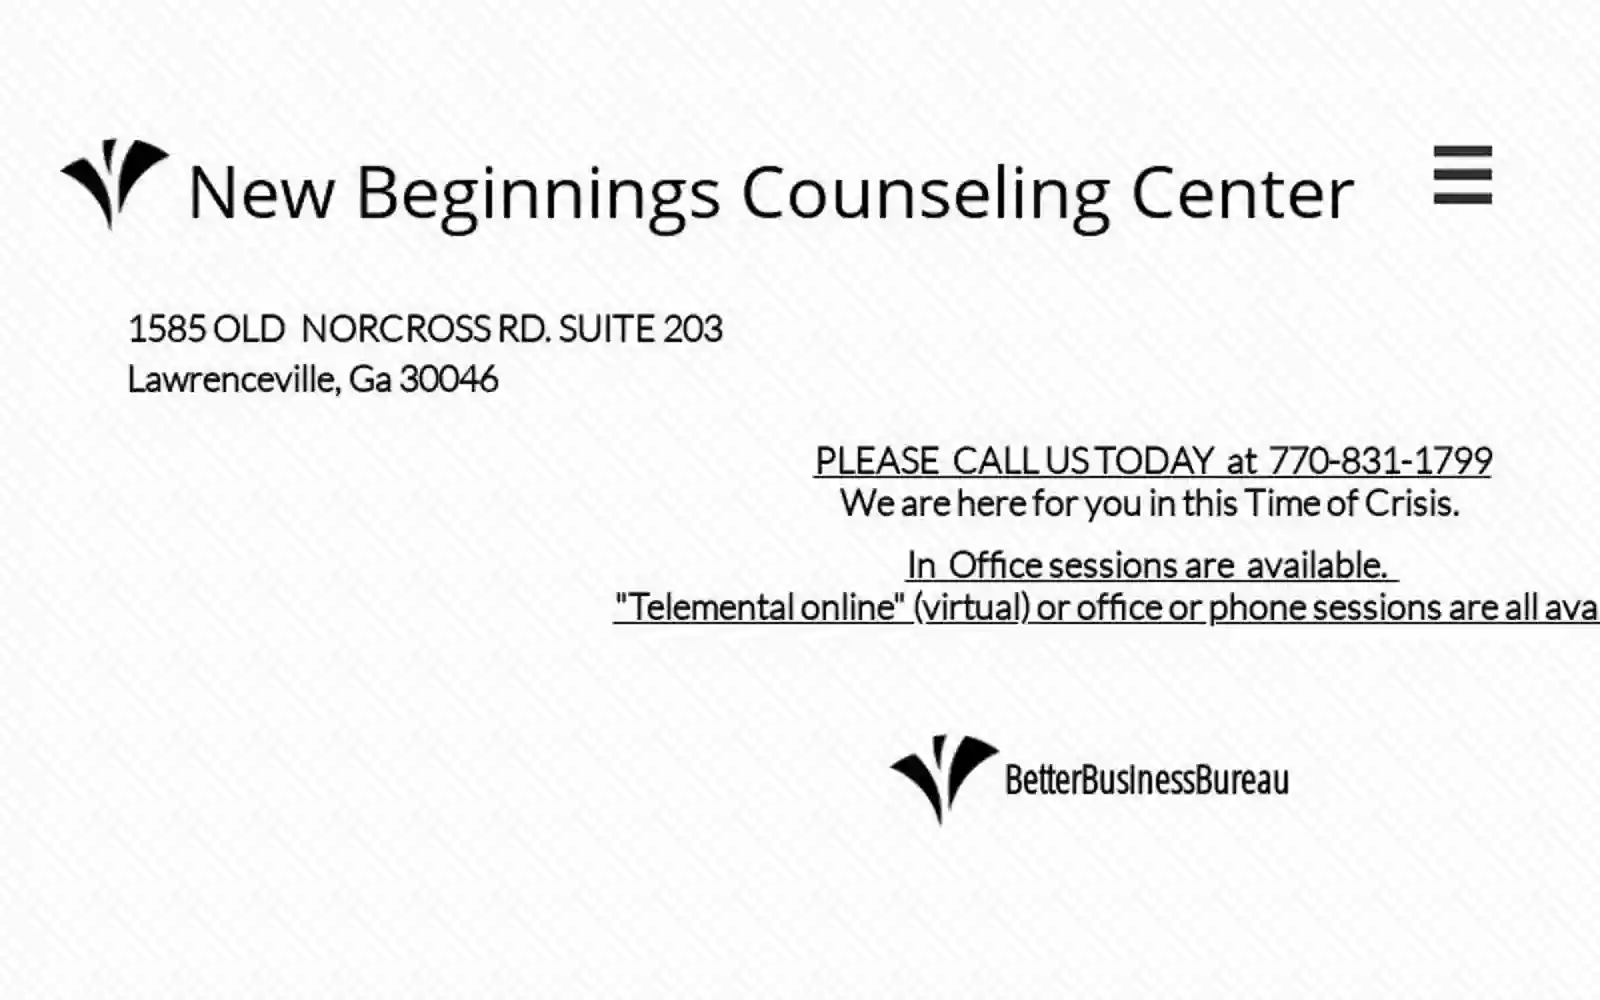 New Beginnings Counseling Center